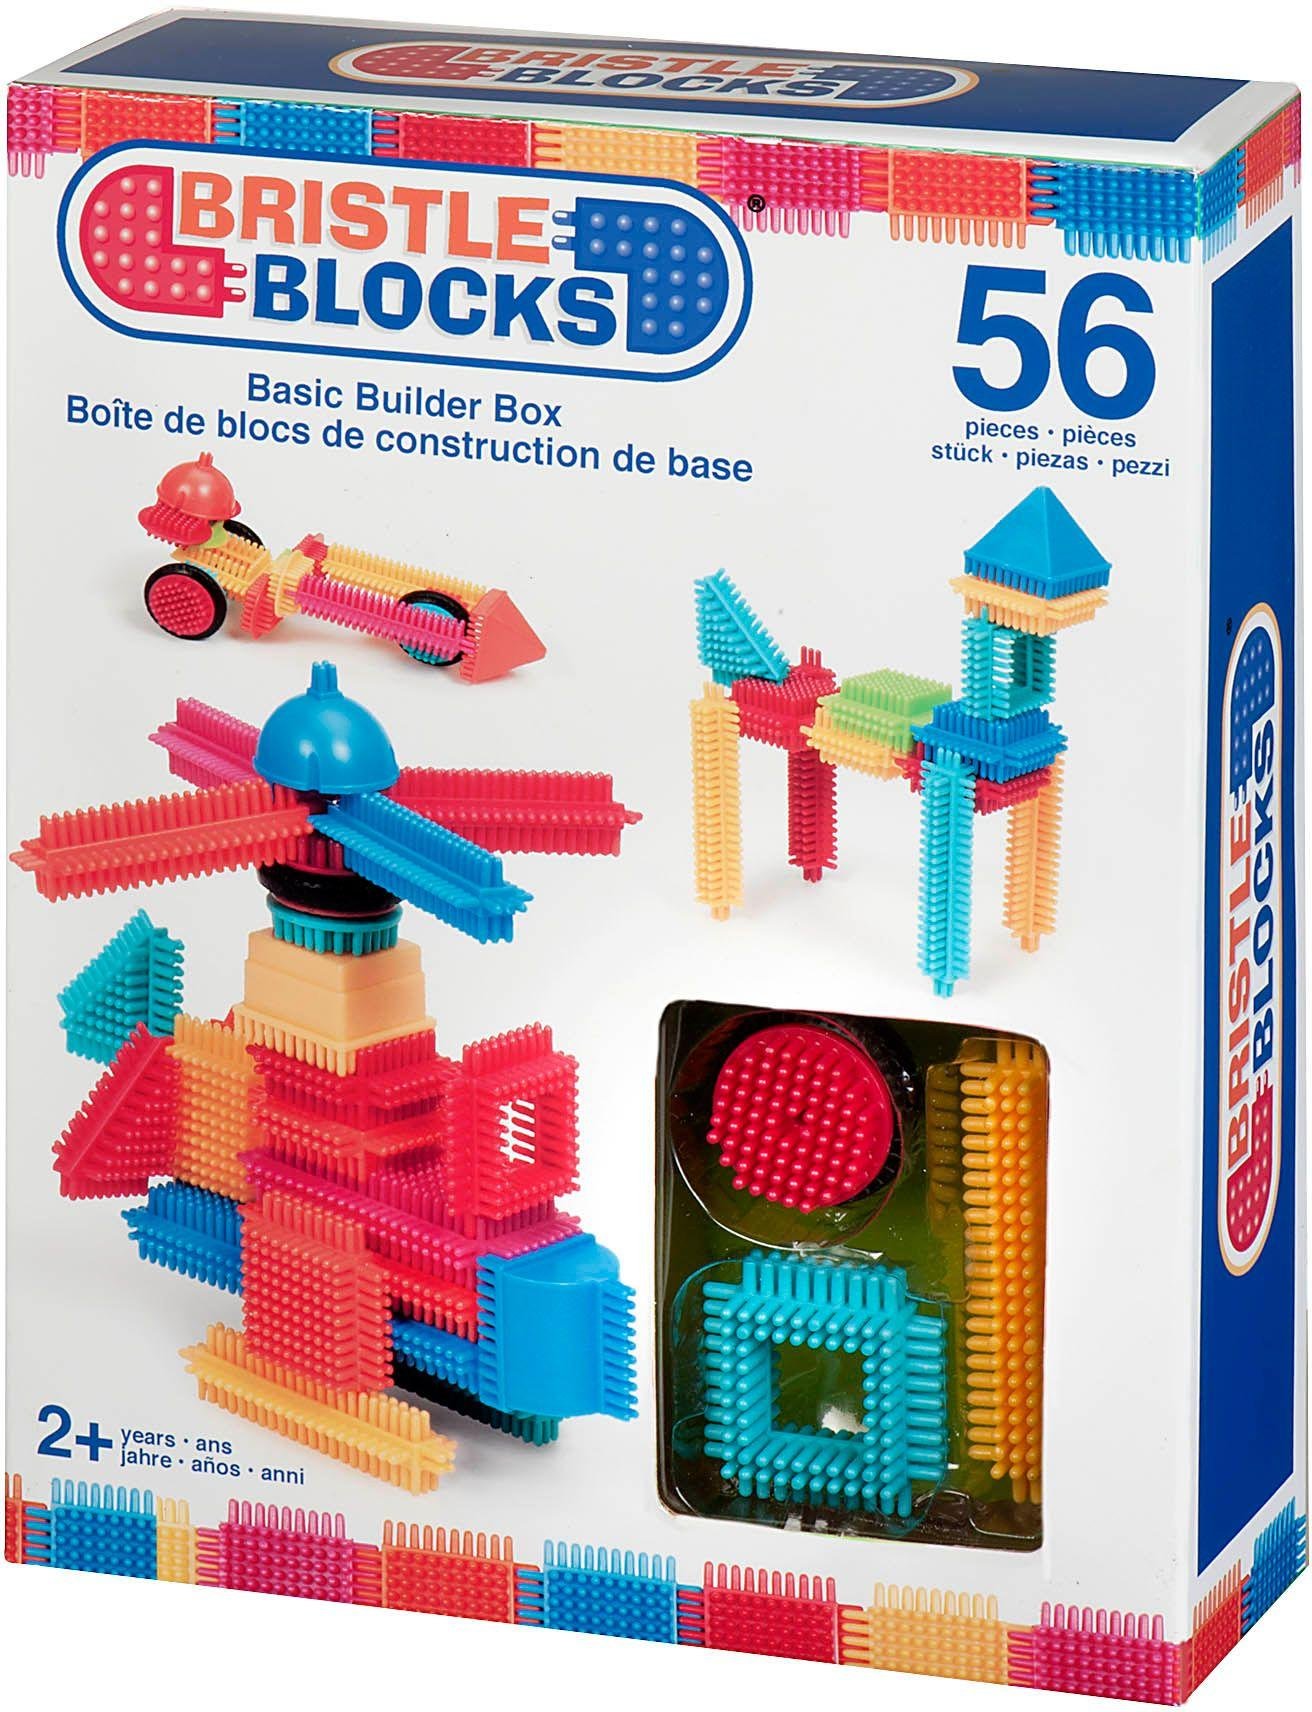 Bristle Blocks Basic Builder Box - 56 Pieces